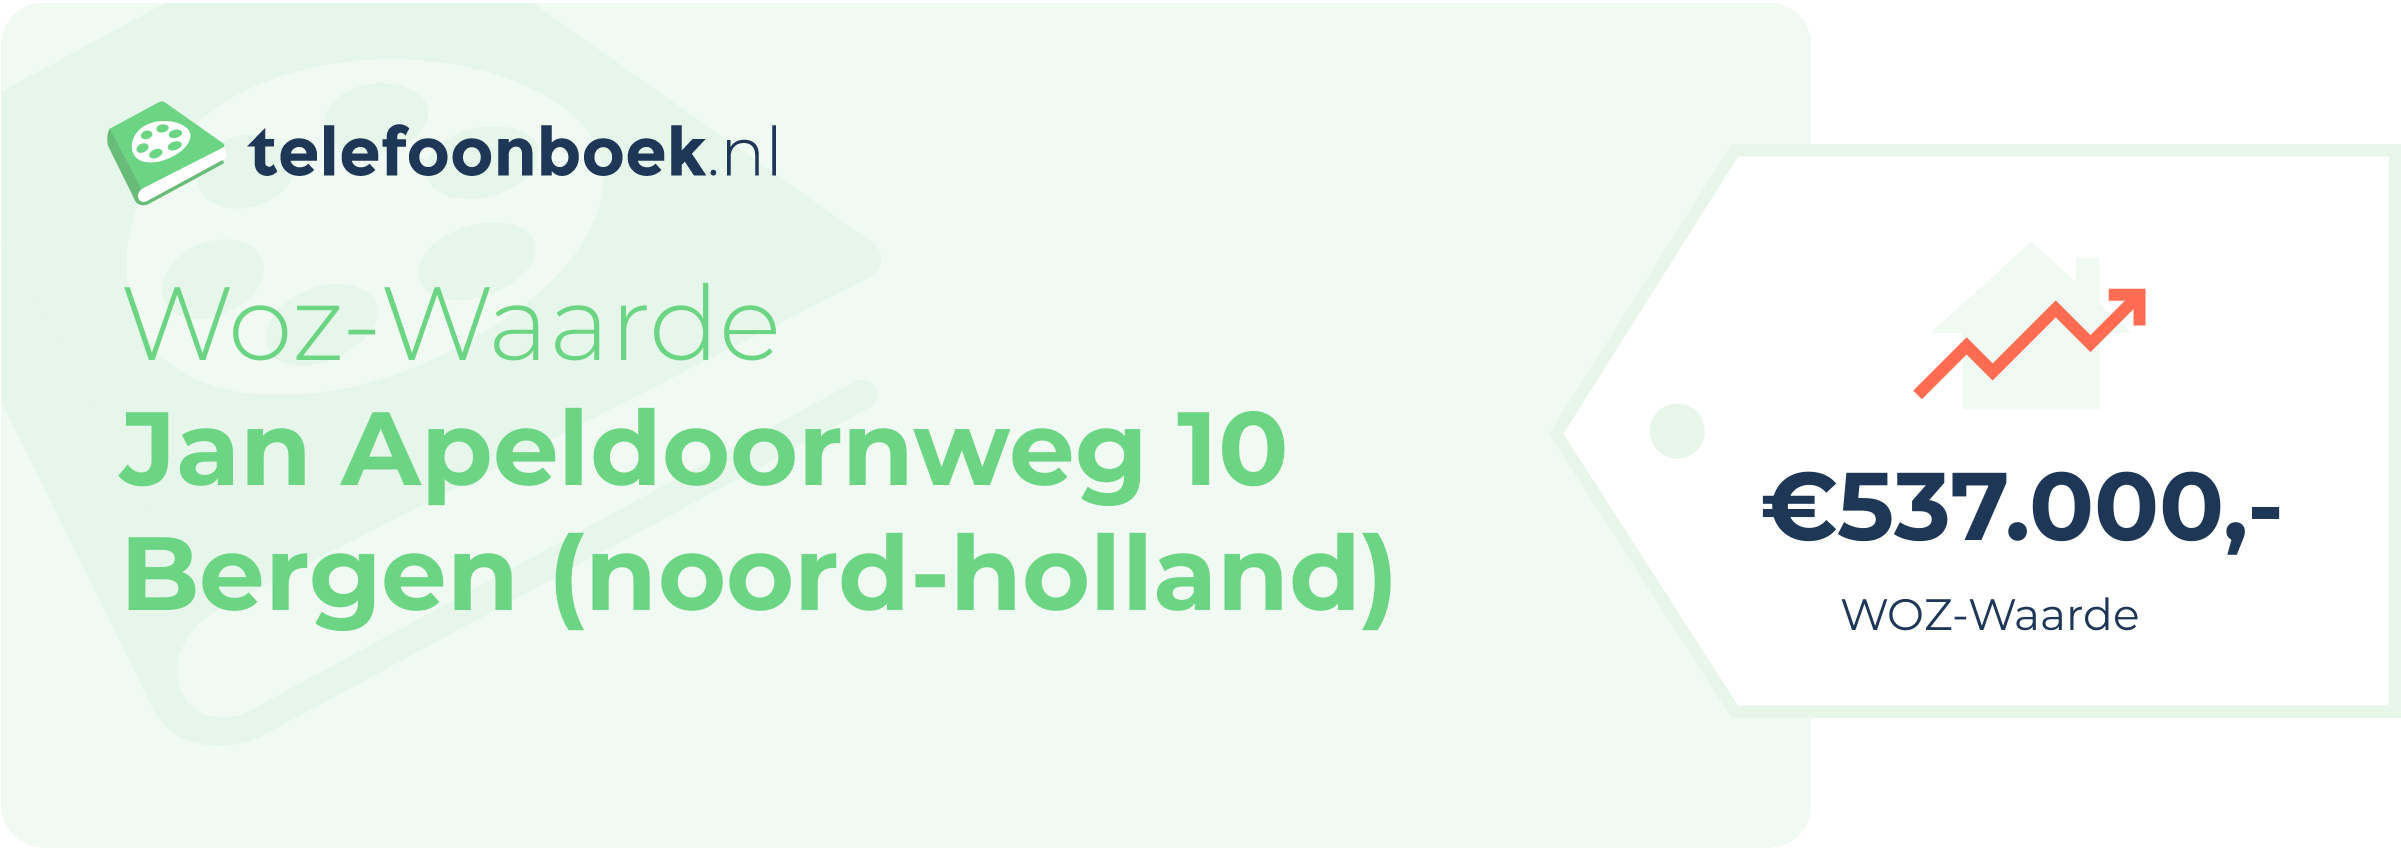 WOZ-waarde Jan Apeldoornweg 10 Bergen (Noord-Holland)